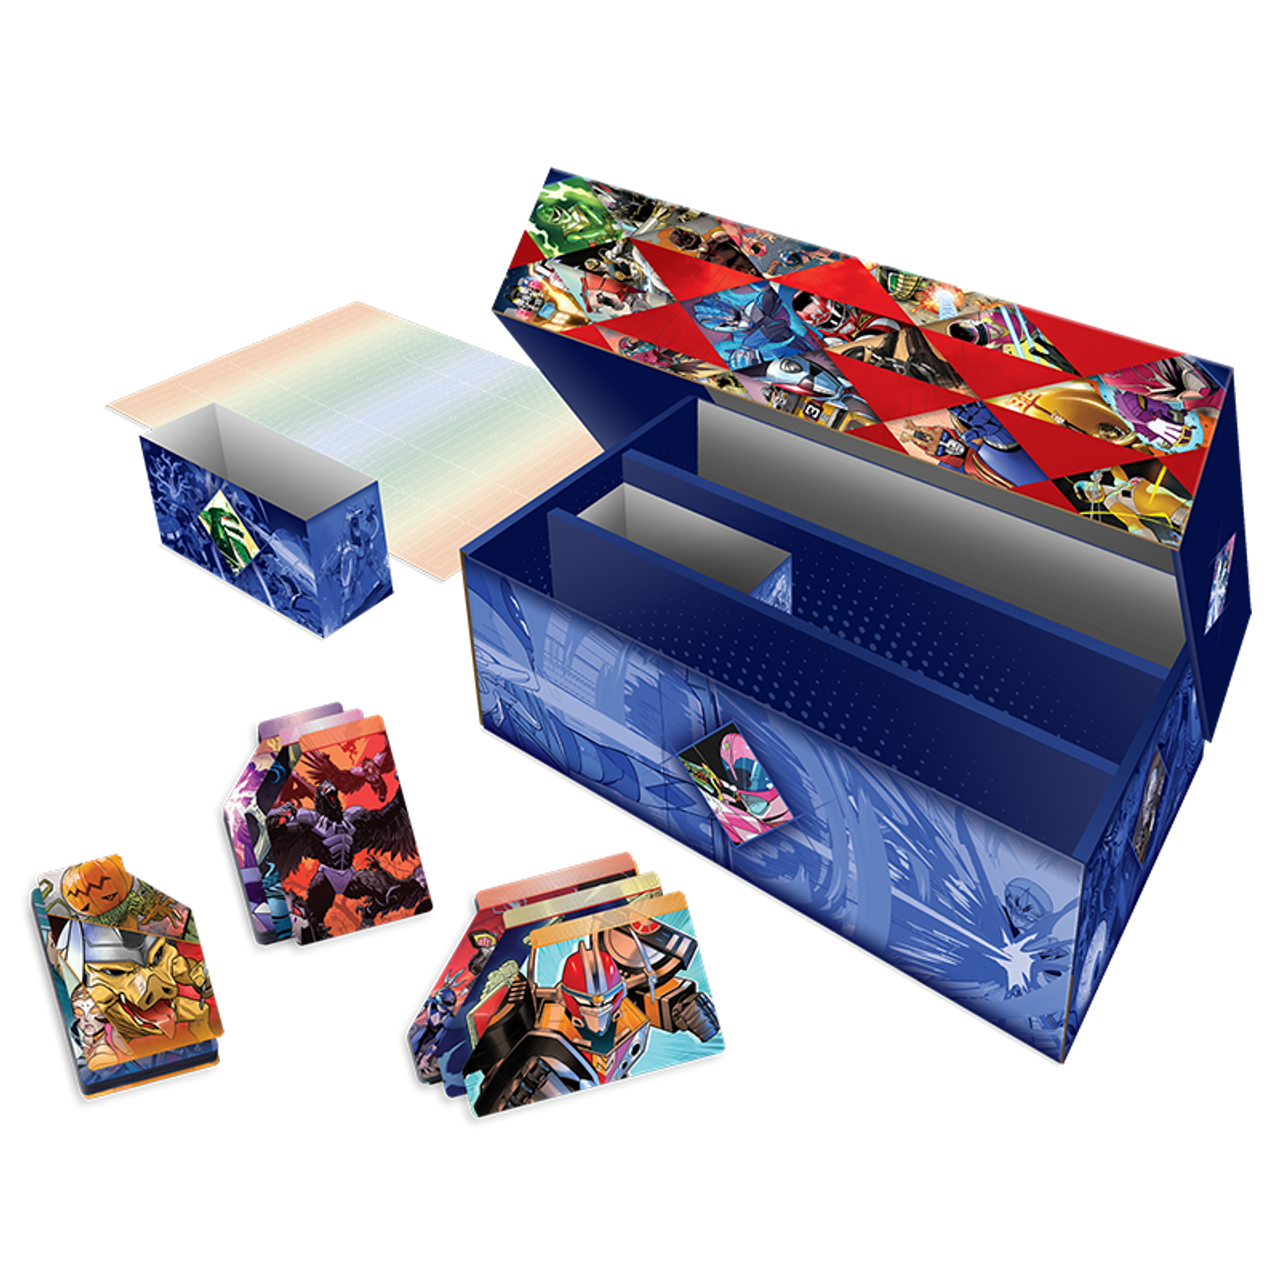 Power Rangers: Heroes of the Grid Card Storage Box